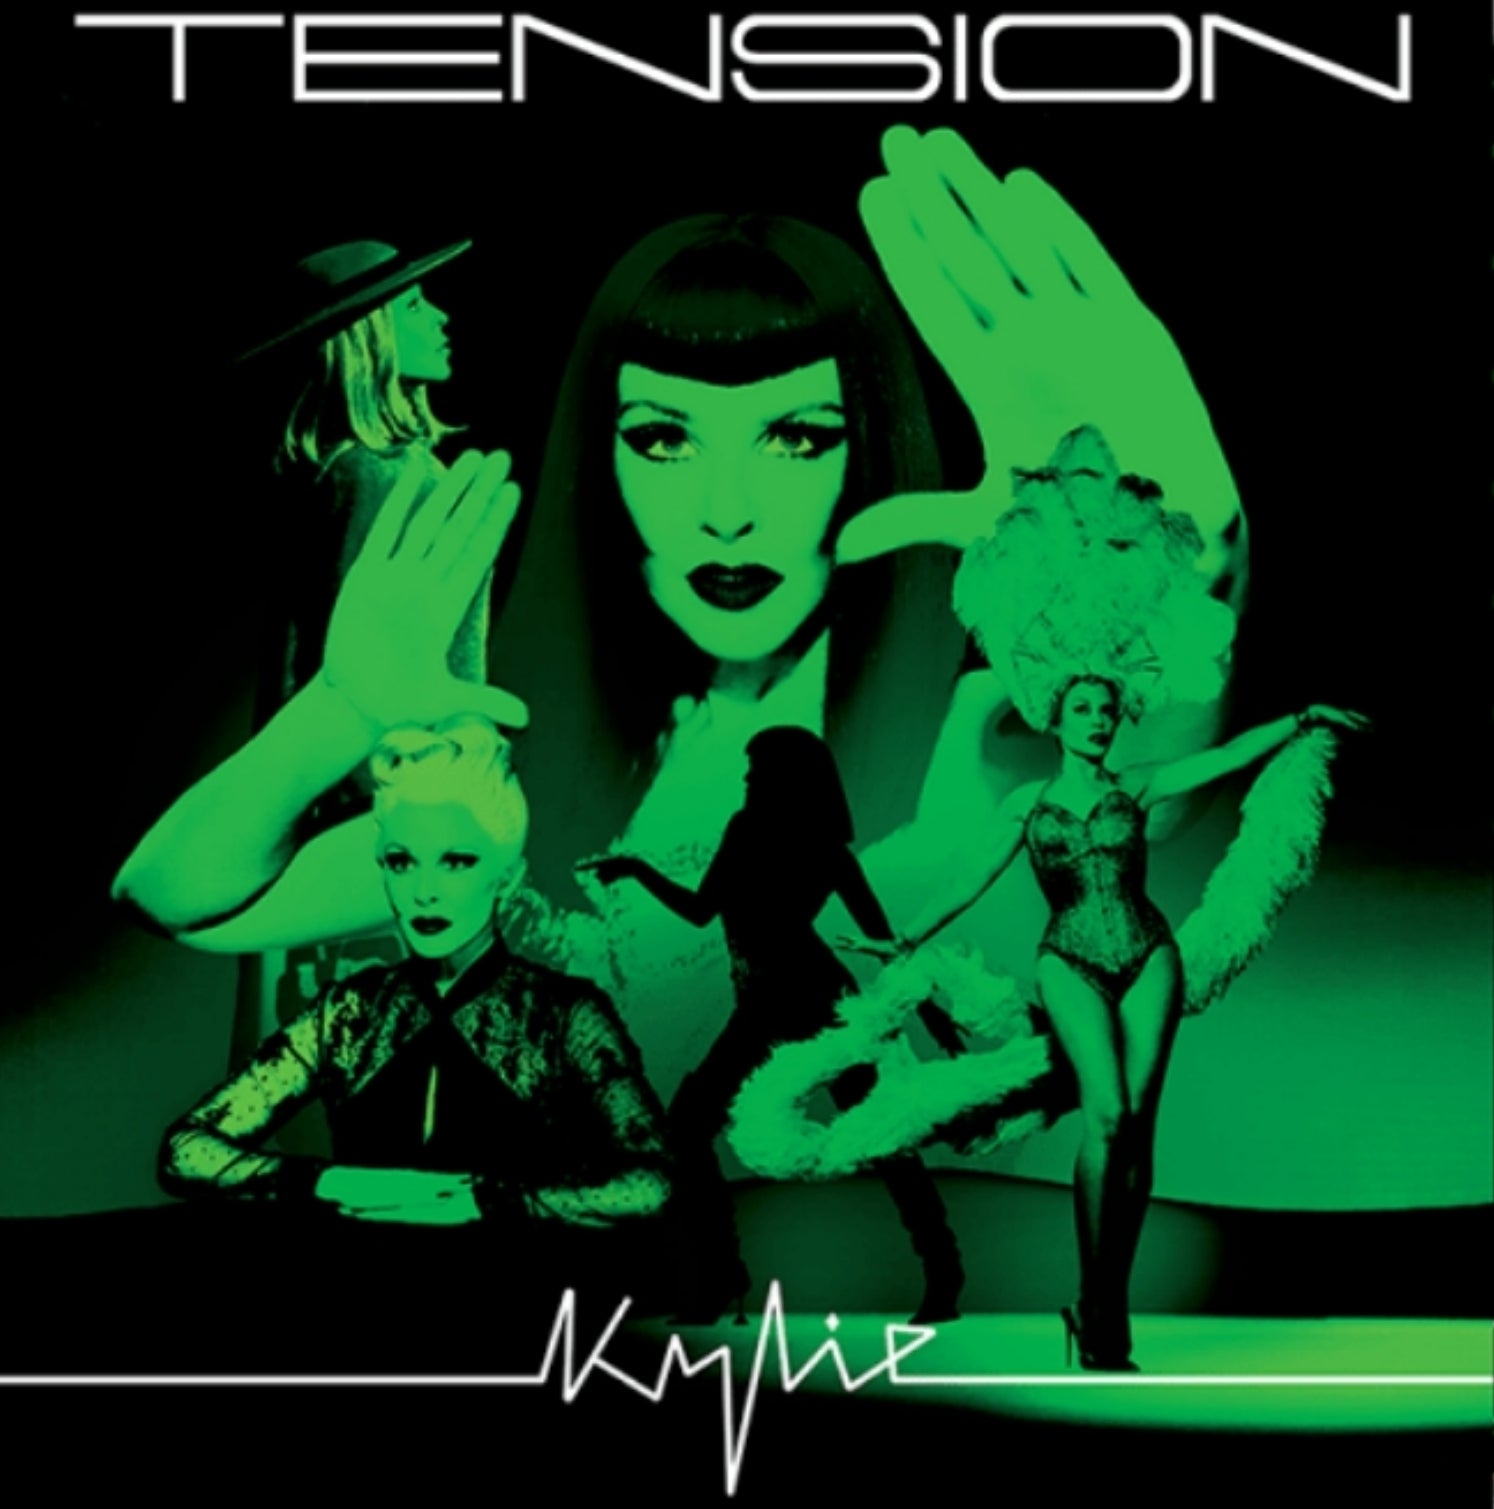 Kylie-Minogue_Tension_UK_Green_Vinyl_7_inch_Single